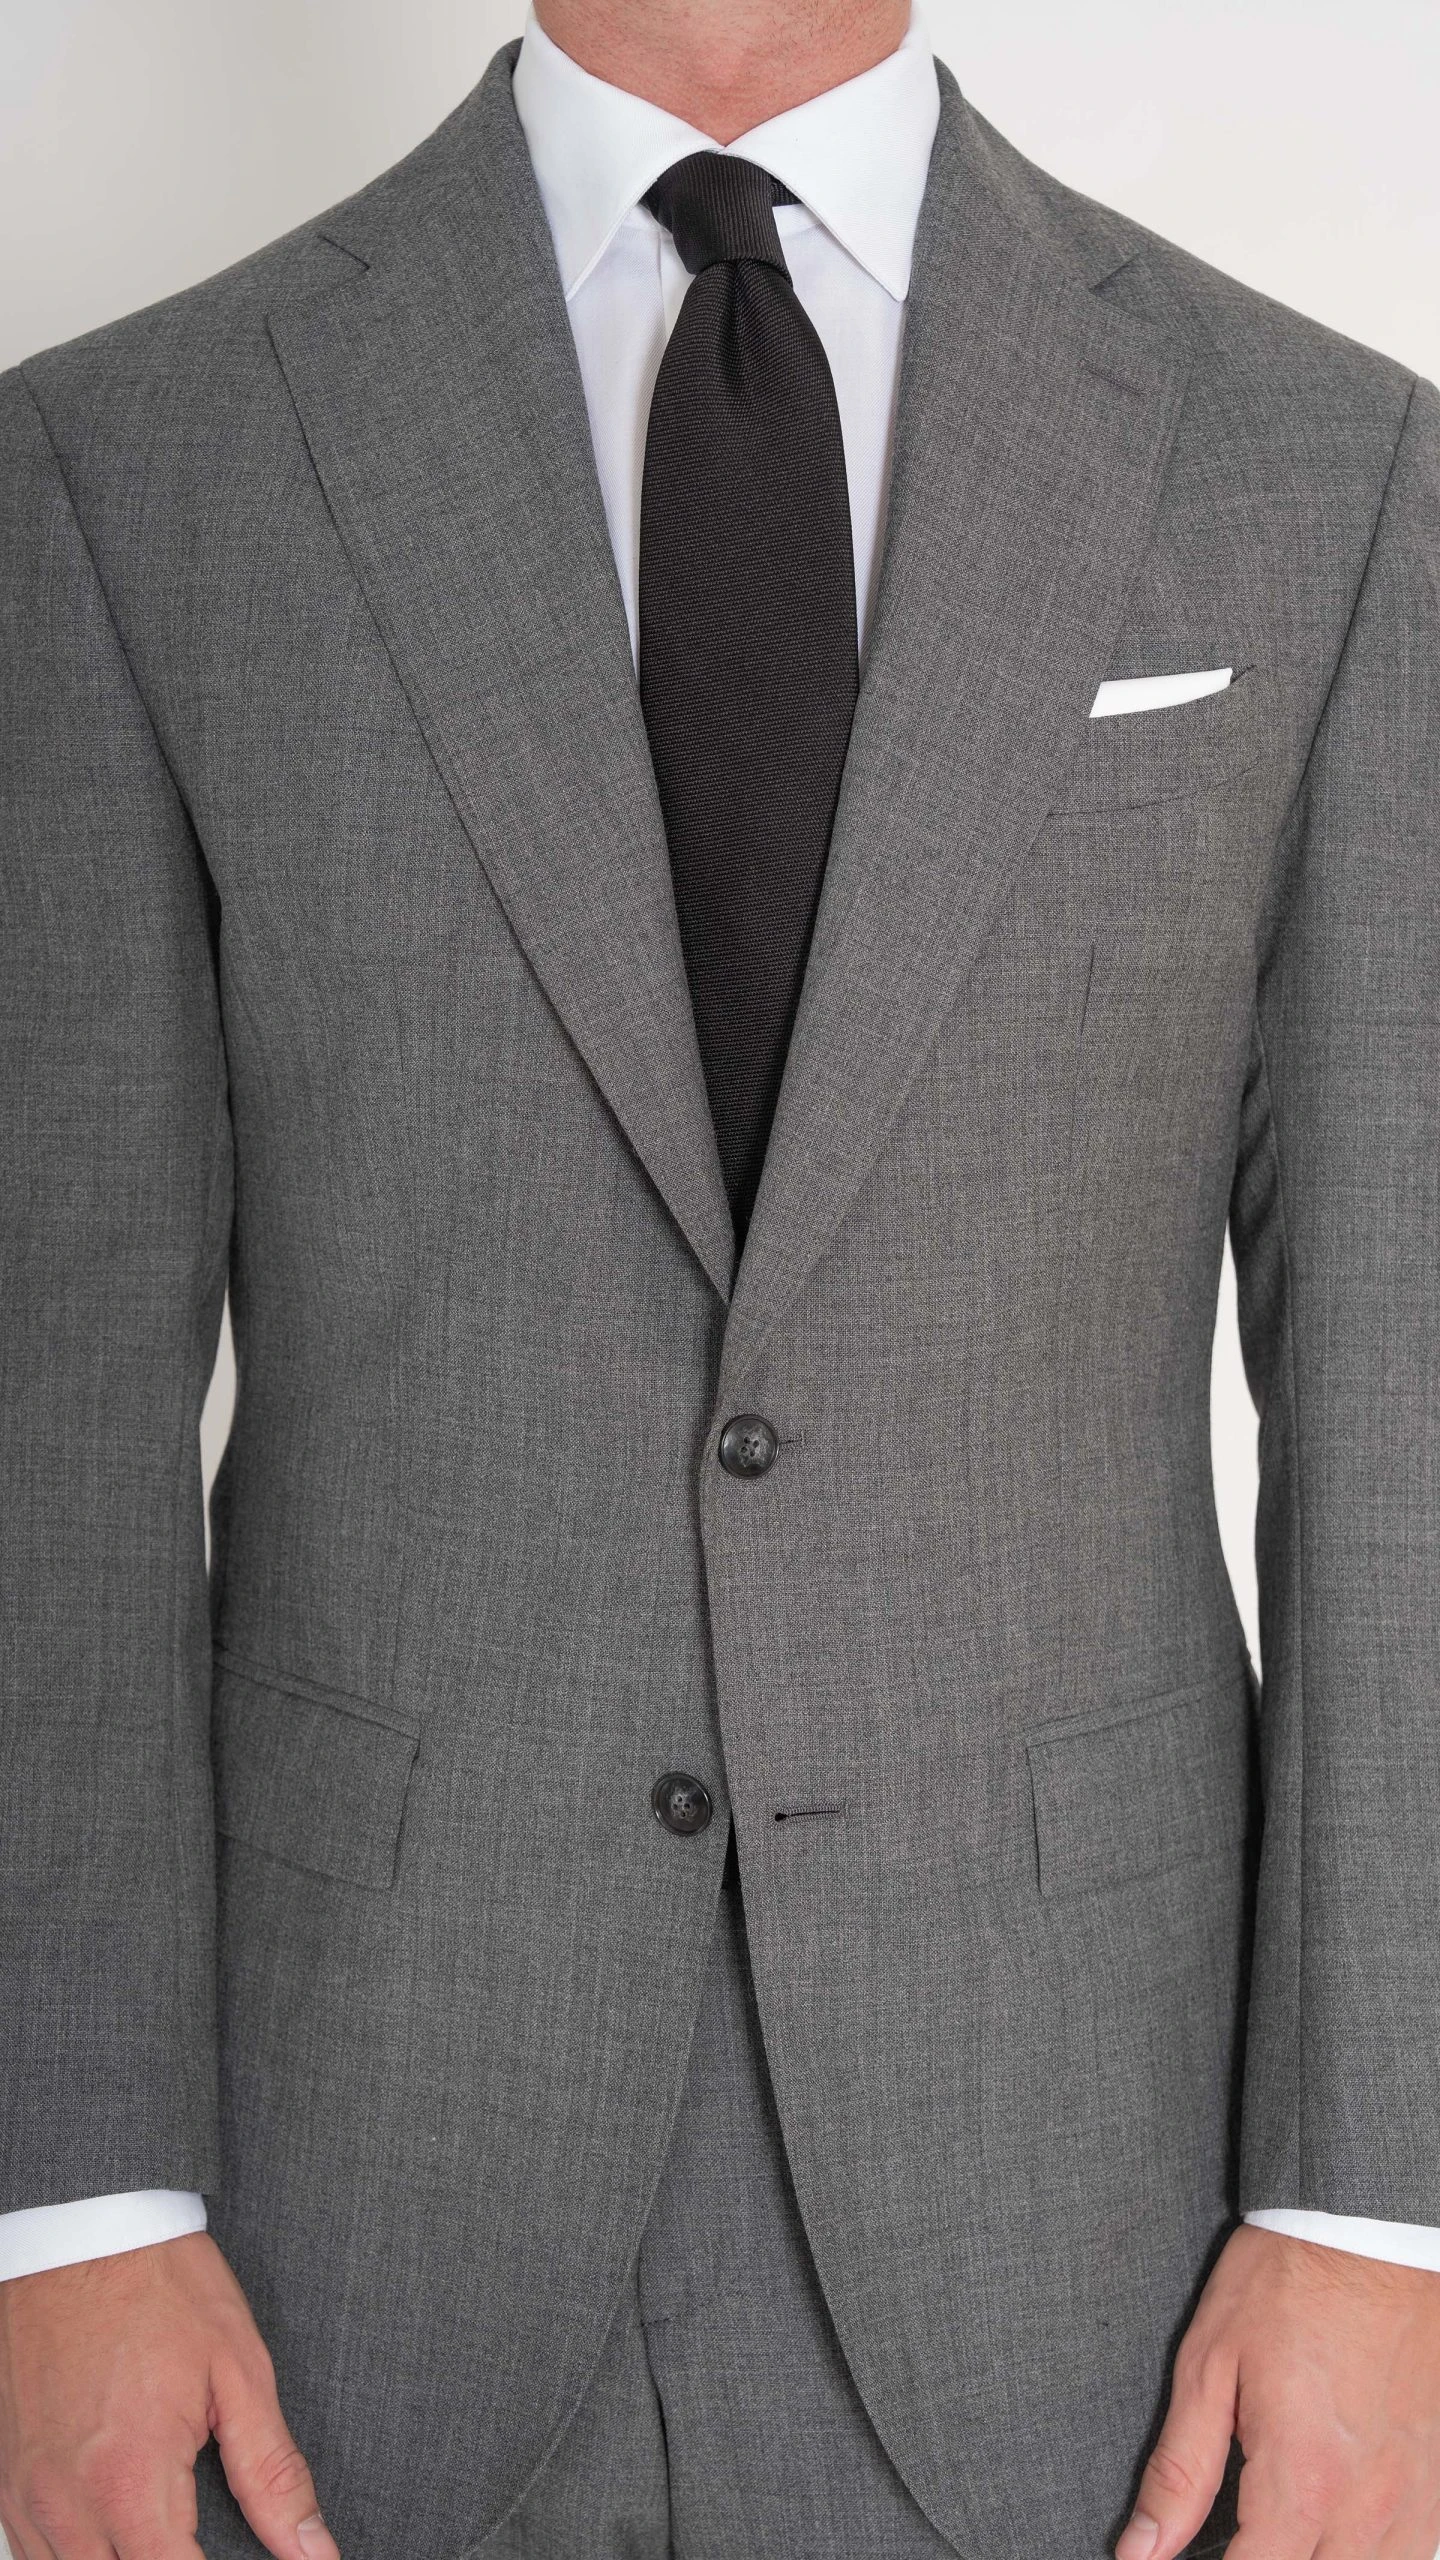 Medium Grey TwistAir Suit Details 3 compressed